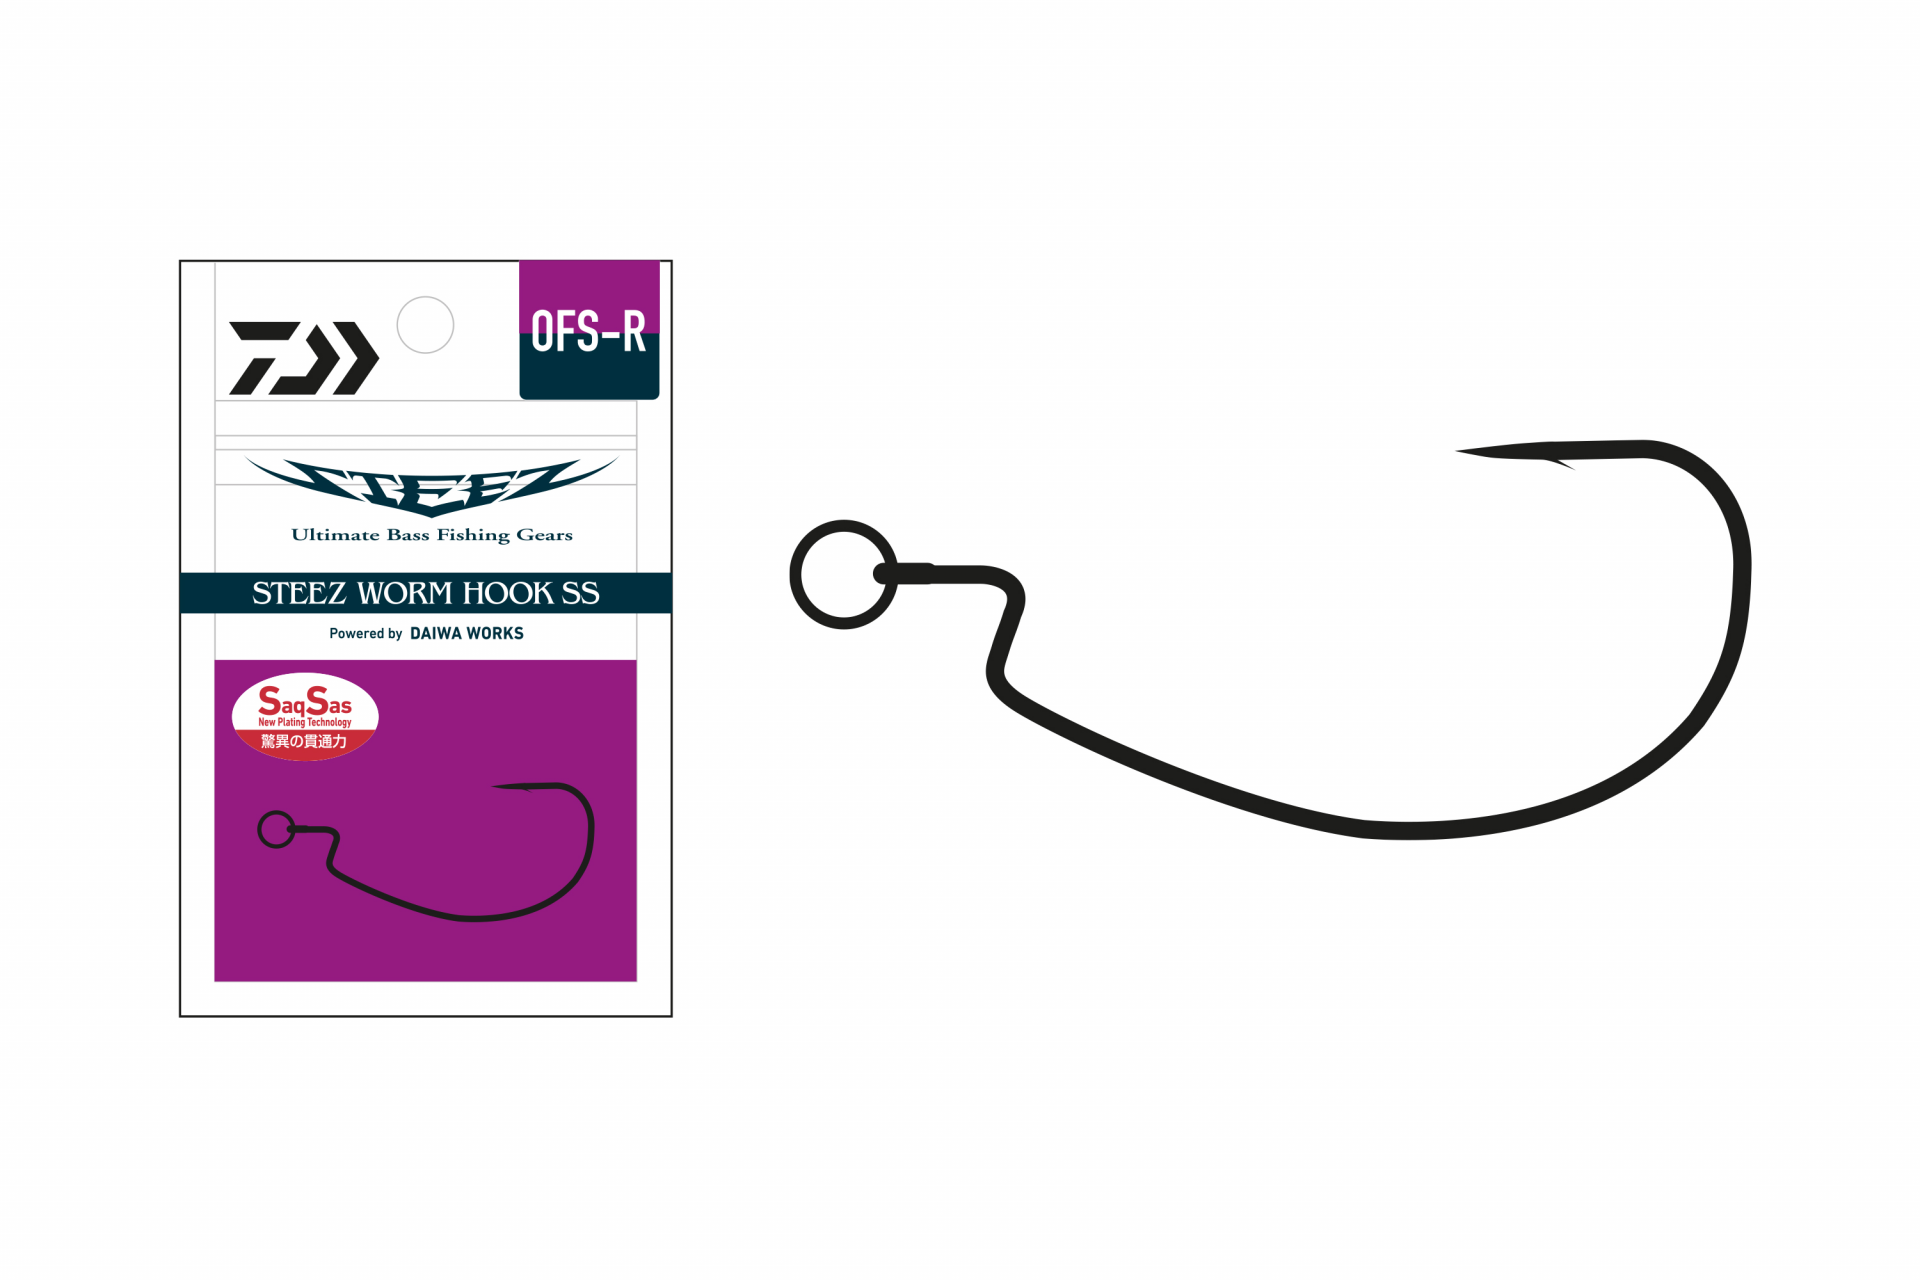 Steez Worm Hook <span>| Offset ring single hook</span>